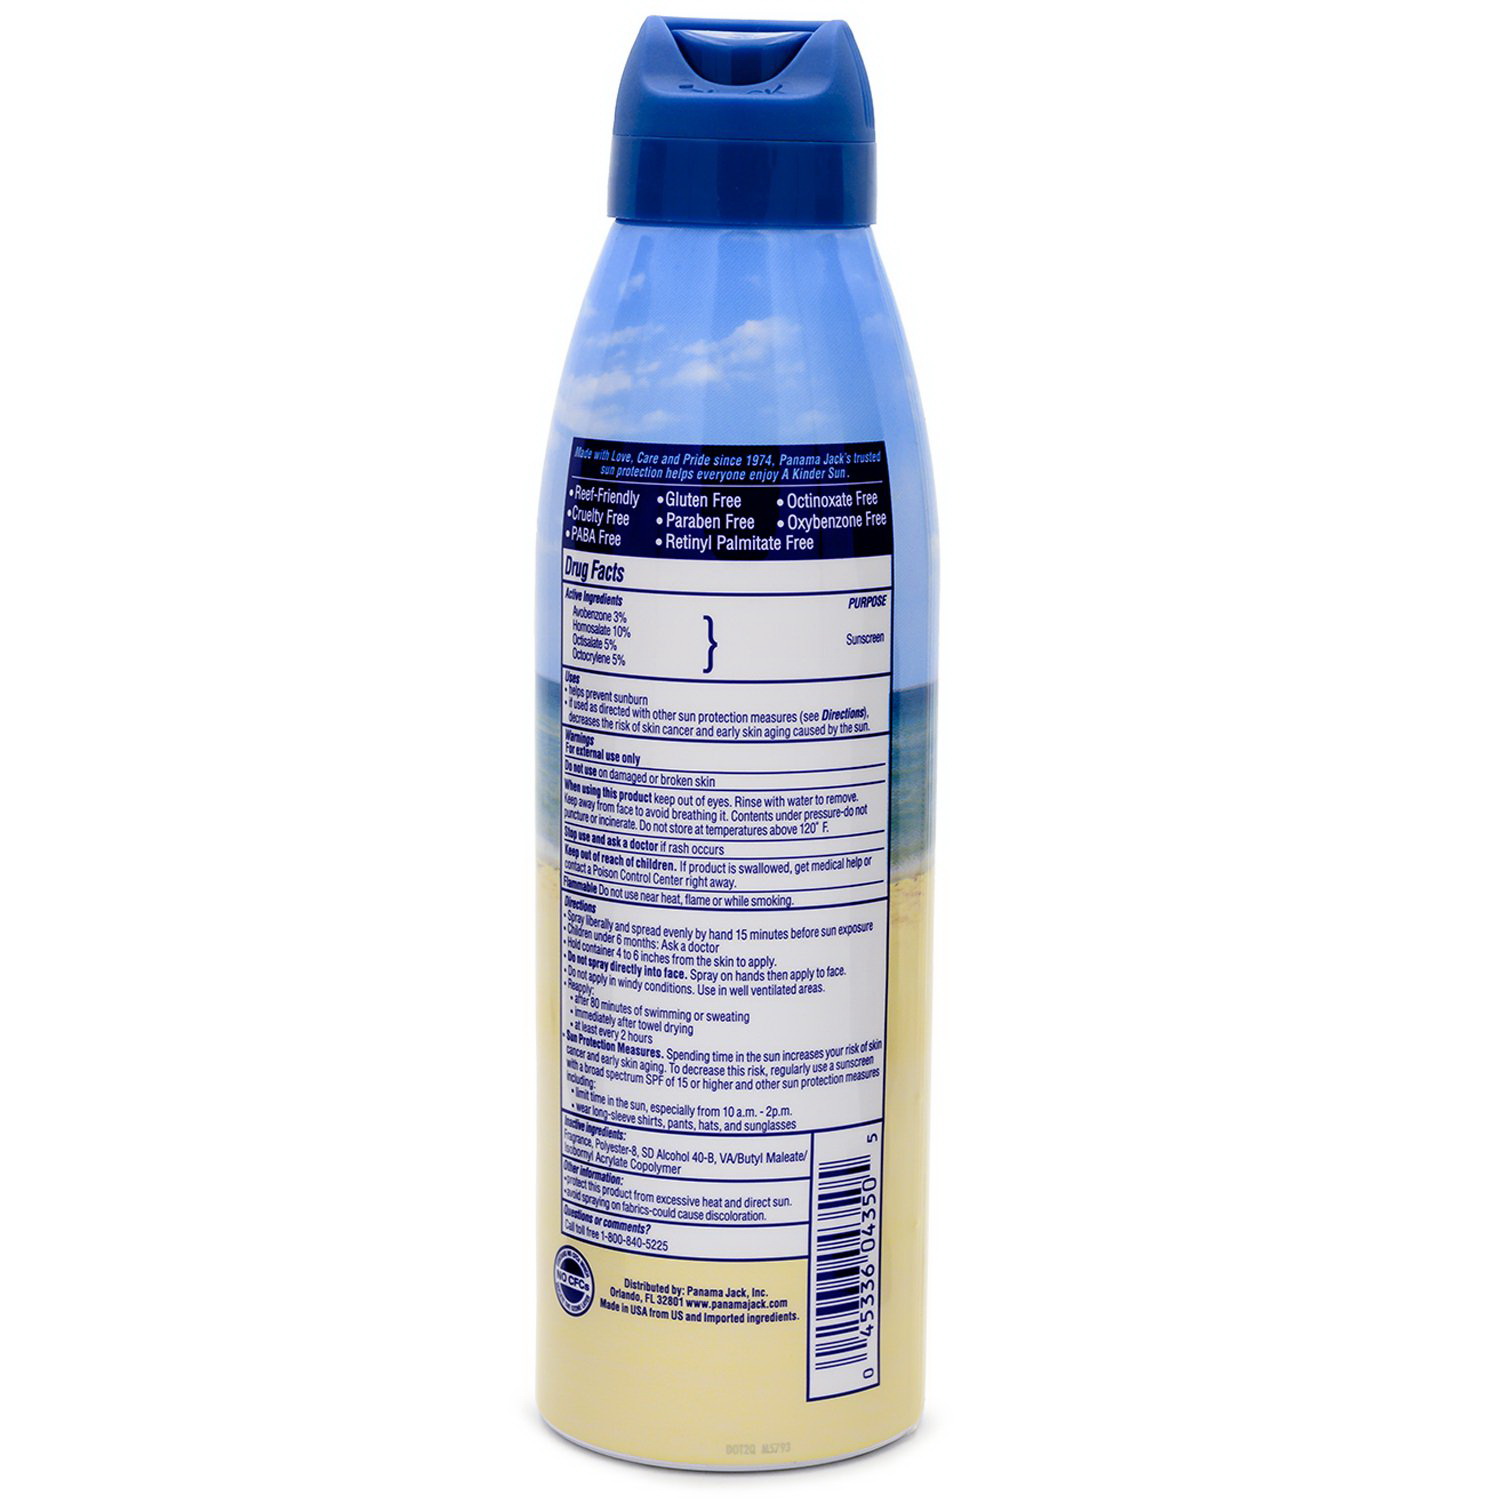 Panama Jack 4350 Continuous Spray Kids Sunscreen, 5.5 oz Bottle - 2